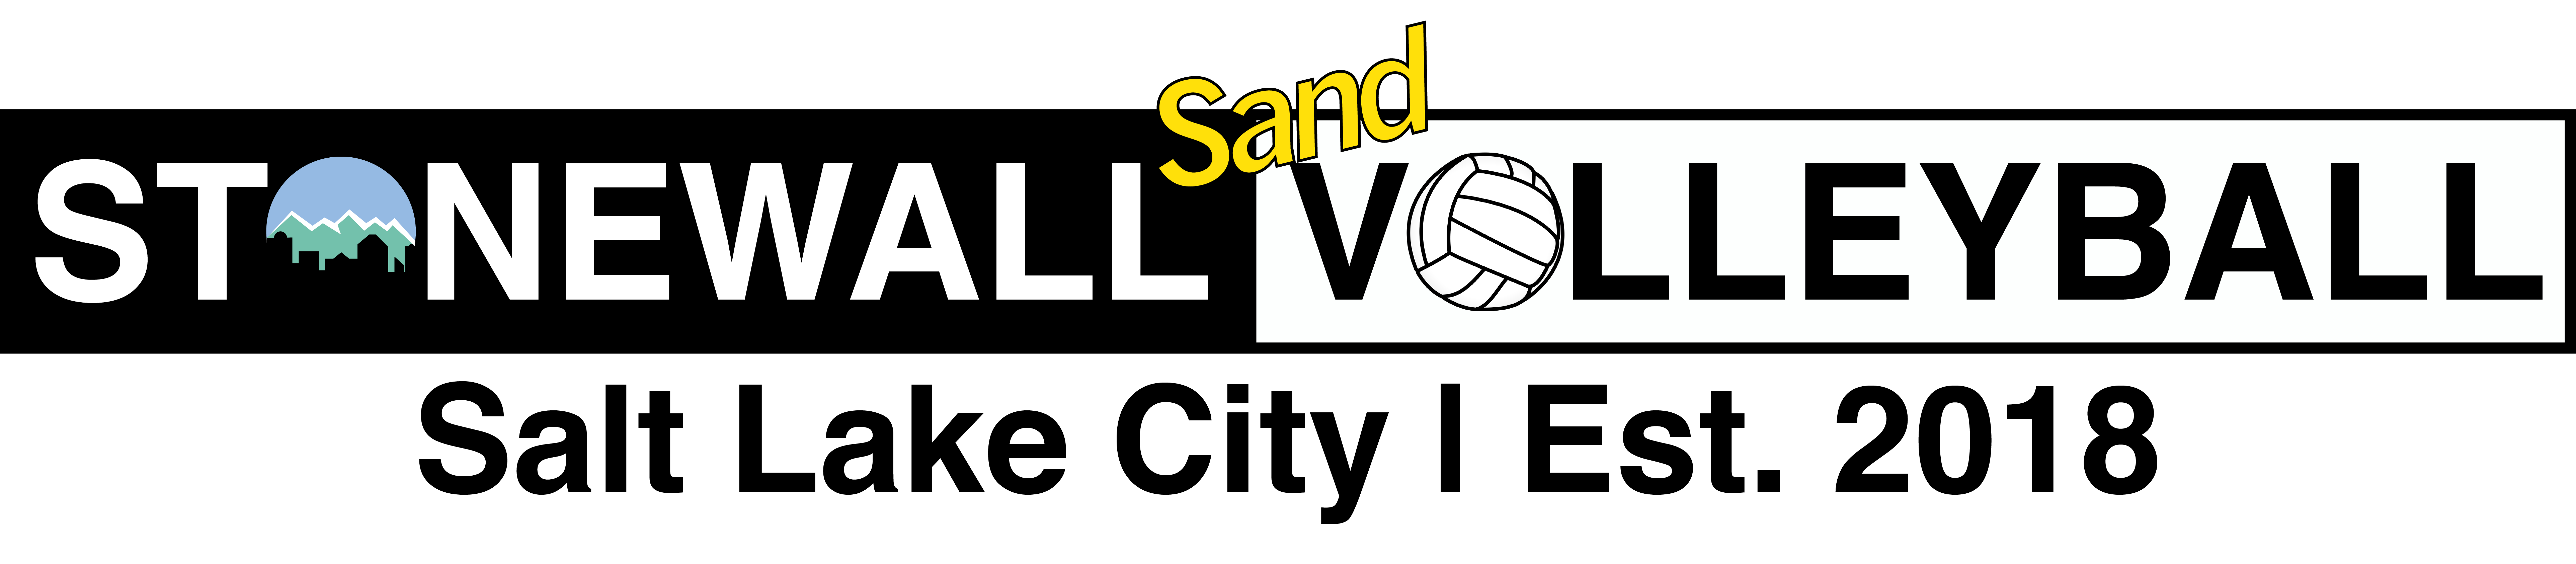 Sand Volleyball Rules Stonewall Sports Salt Lake City